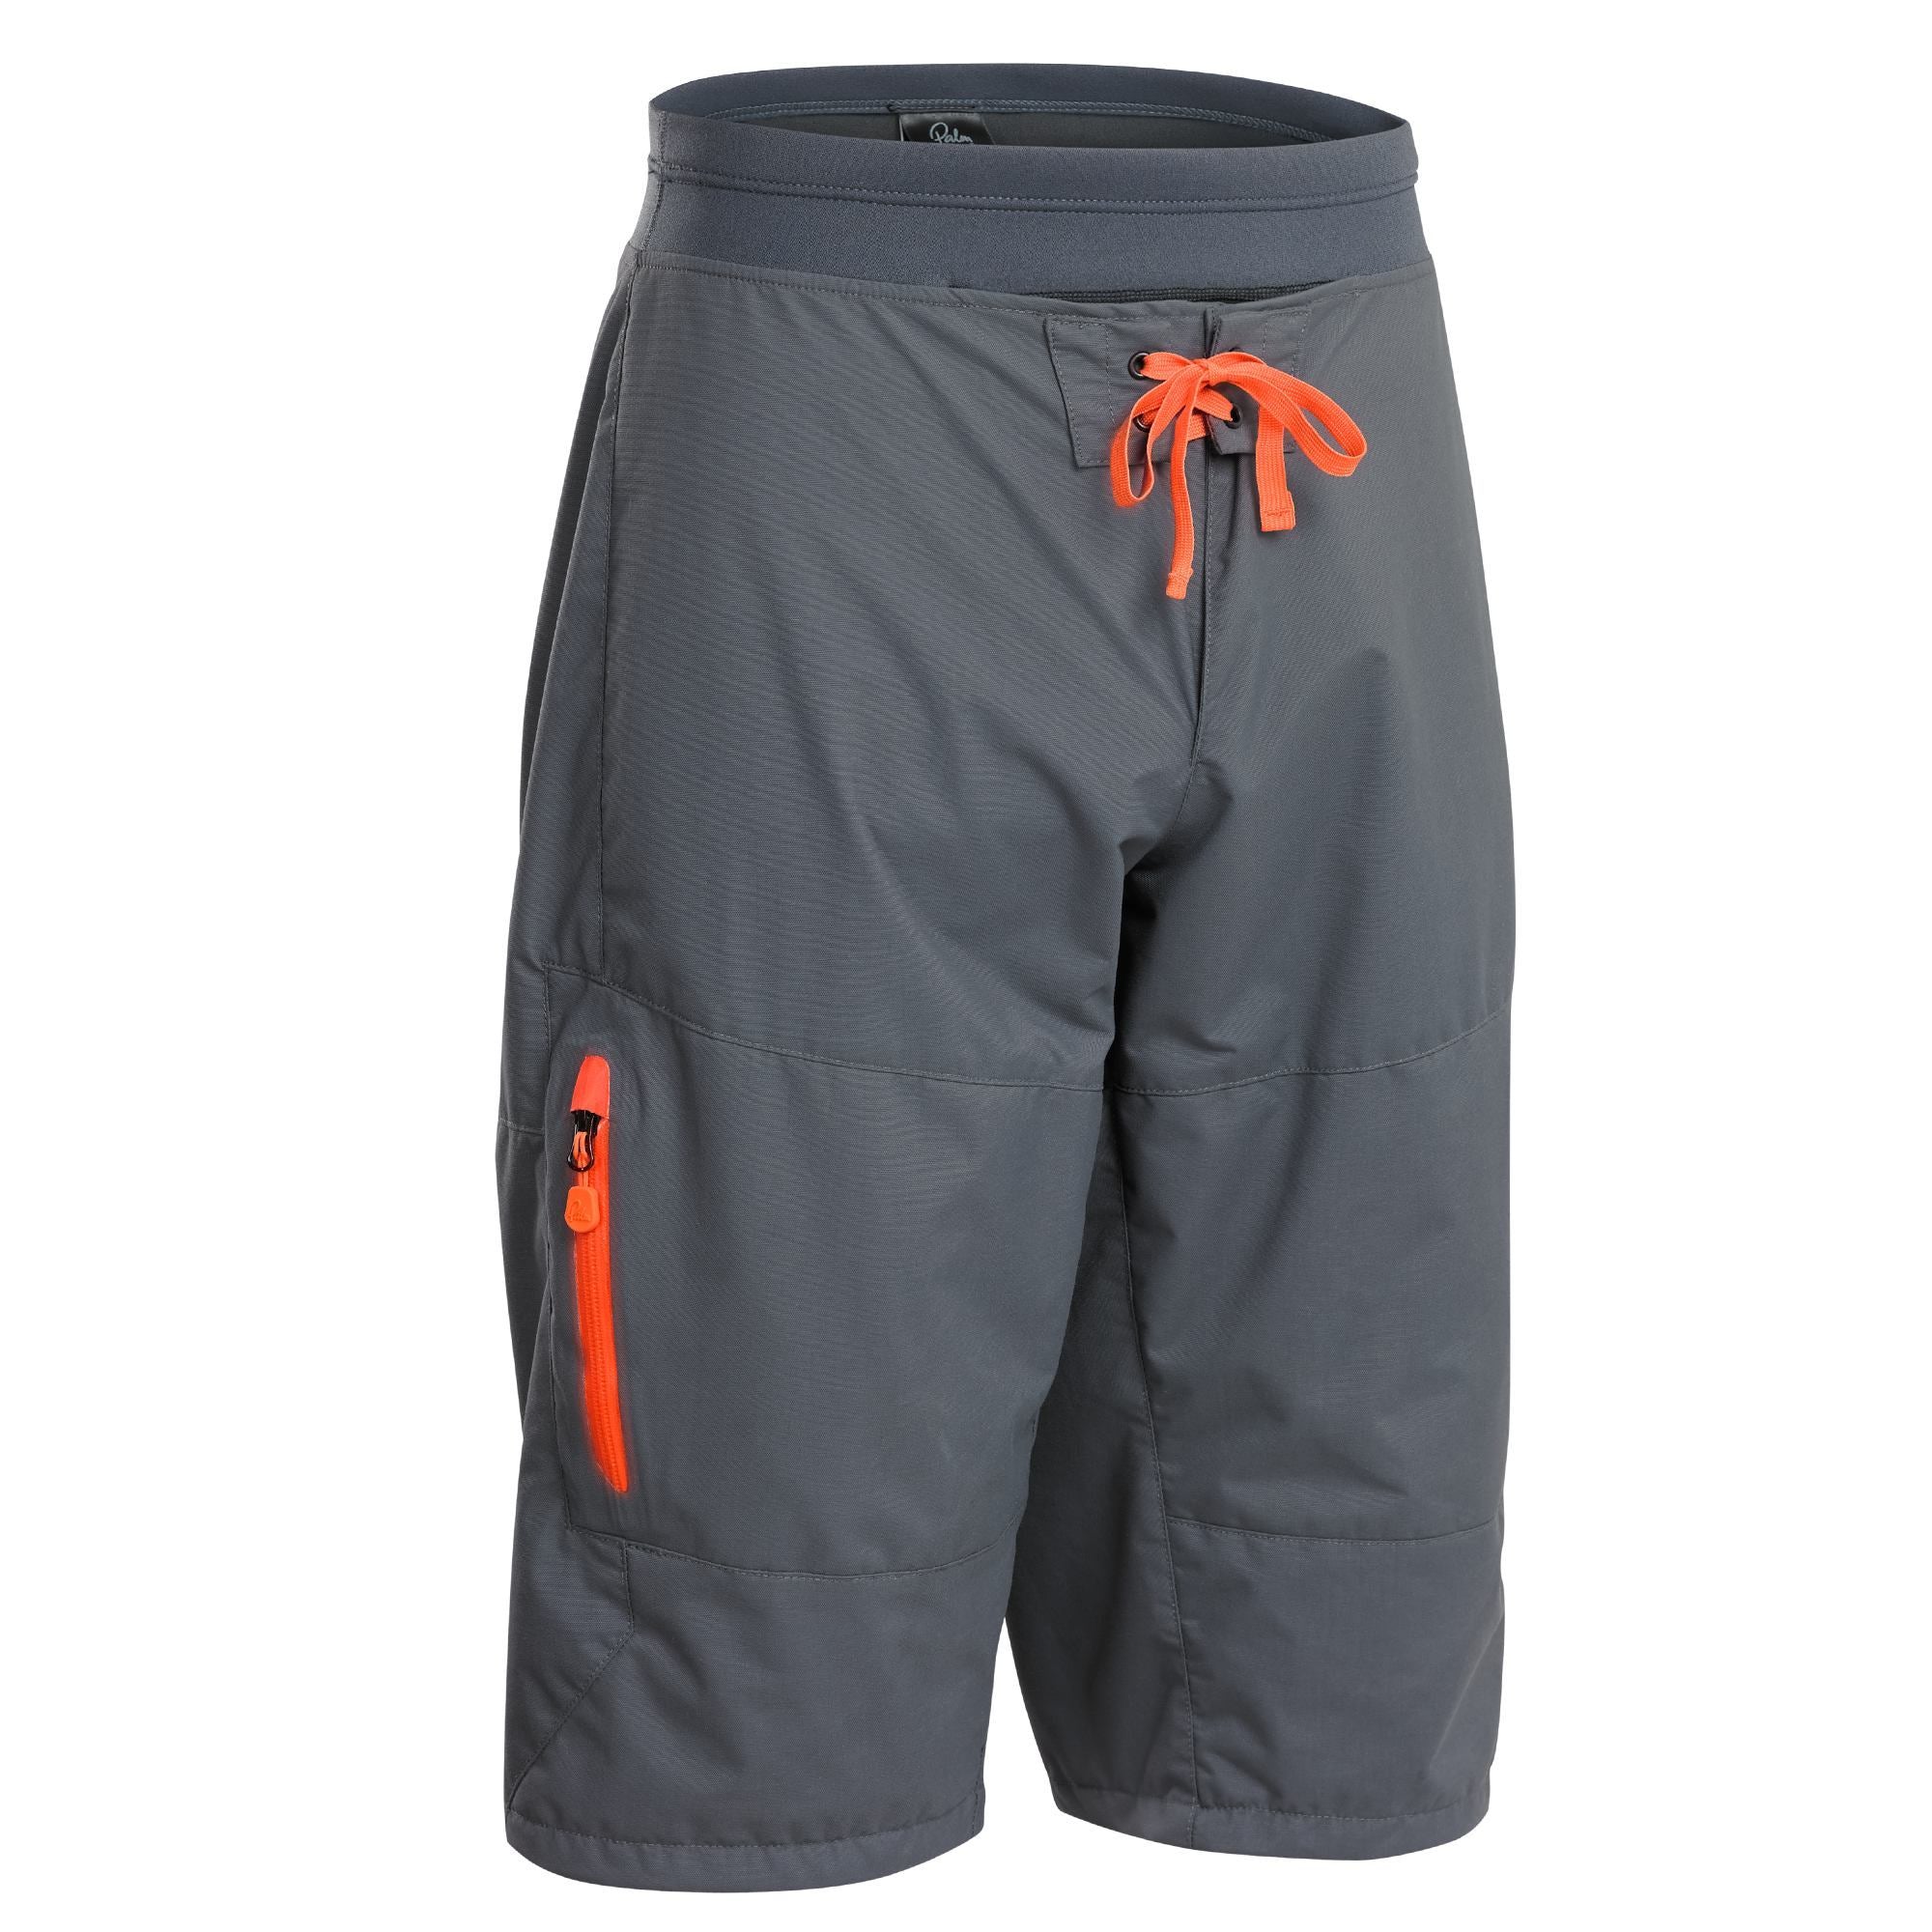 Palm Horizon Shorts, Men's